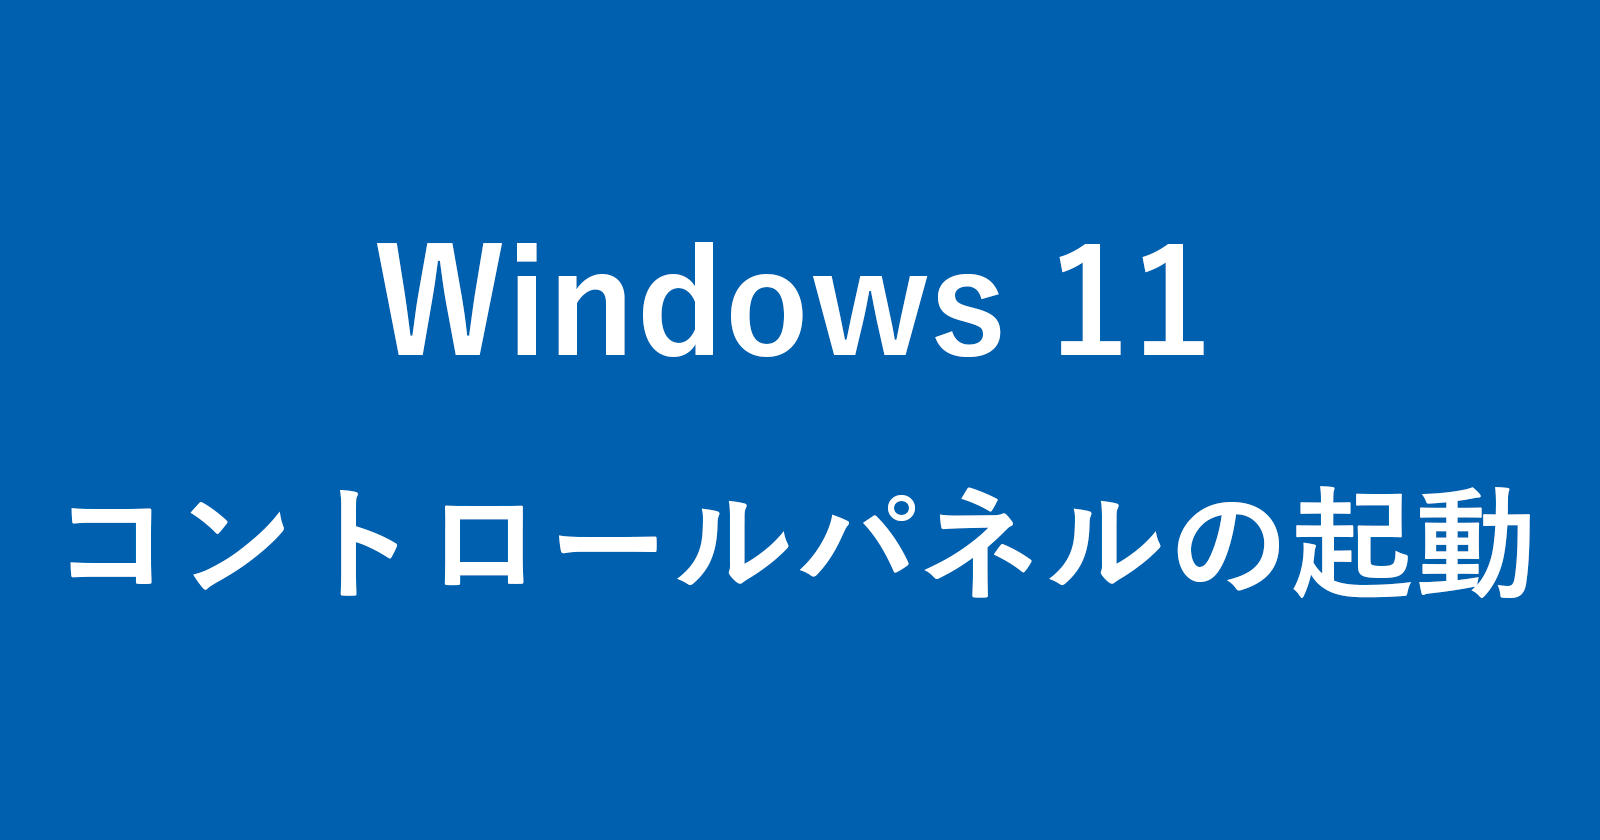 windows 11 open control panel